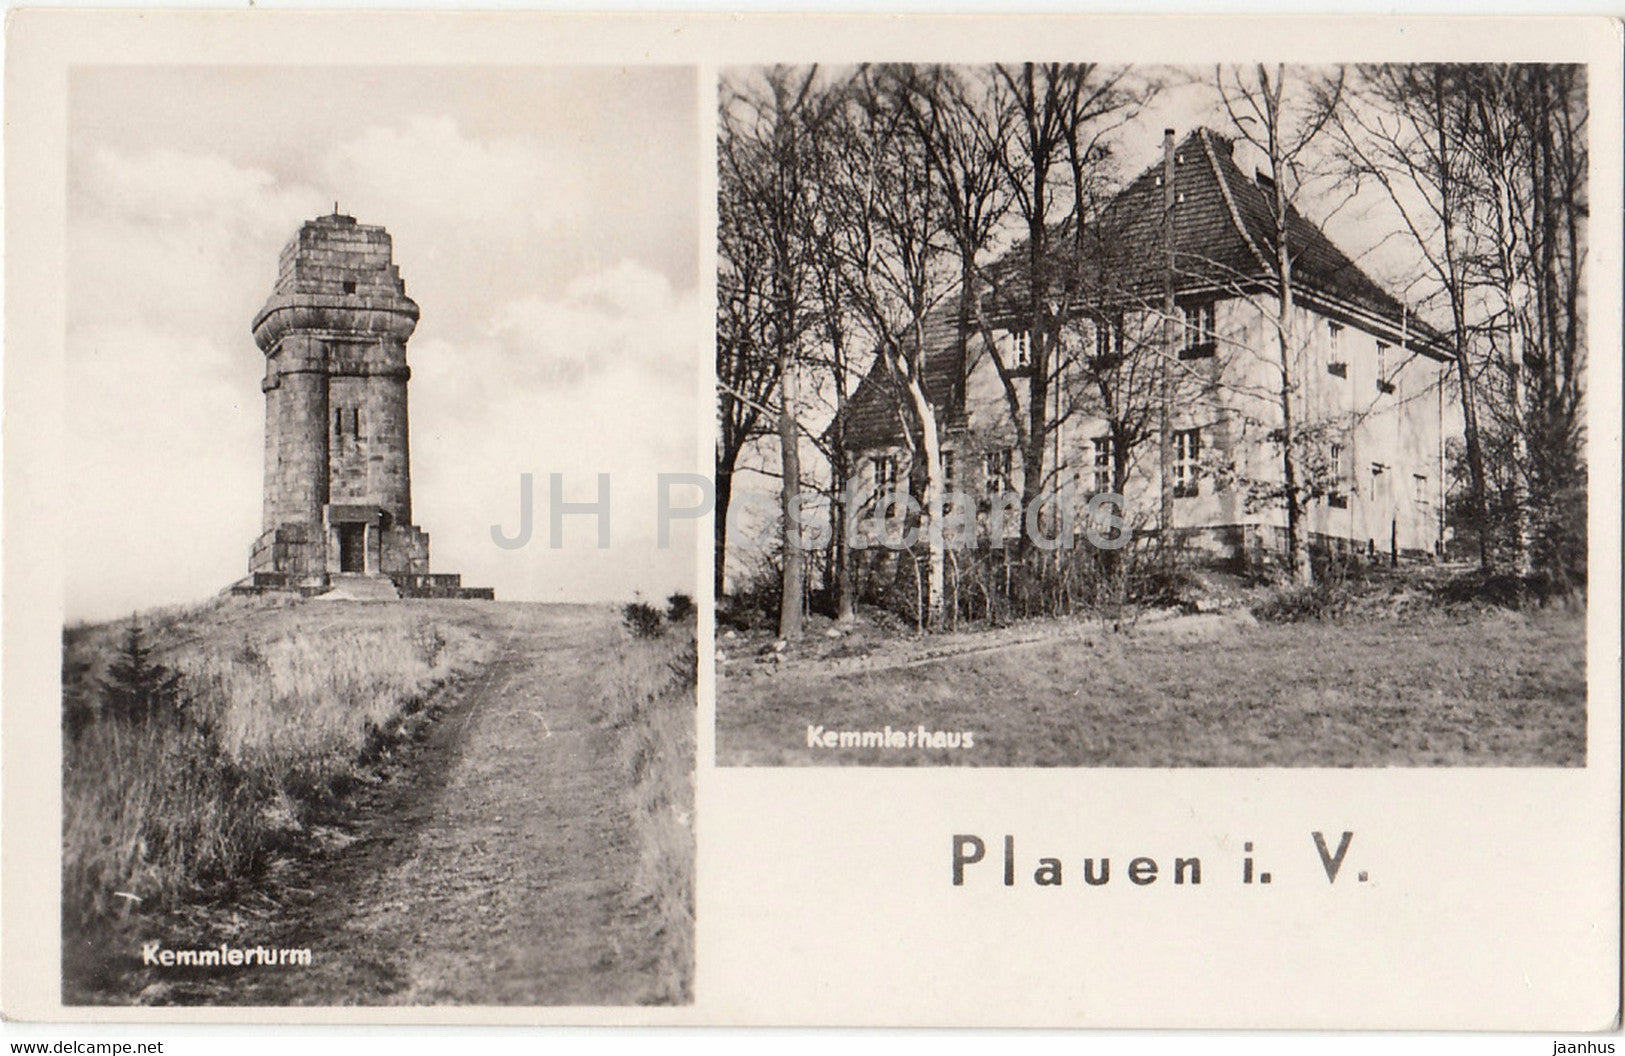 Plauen i V - Kemmlerturm - Kemmlerhaus - Germany DDR - used - JH Postcards